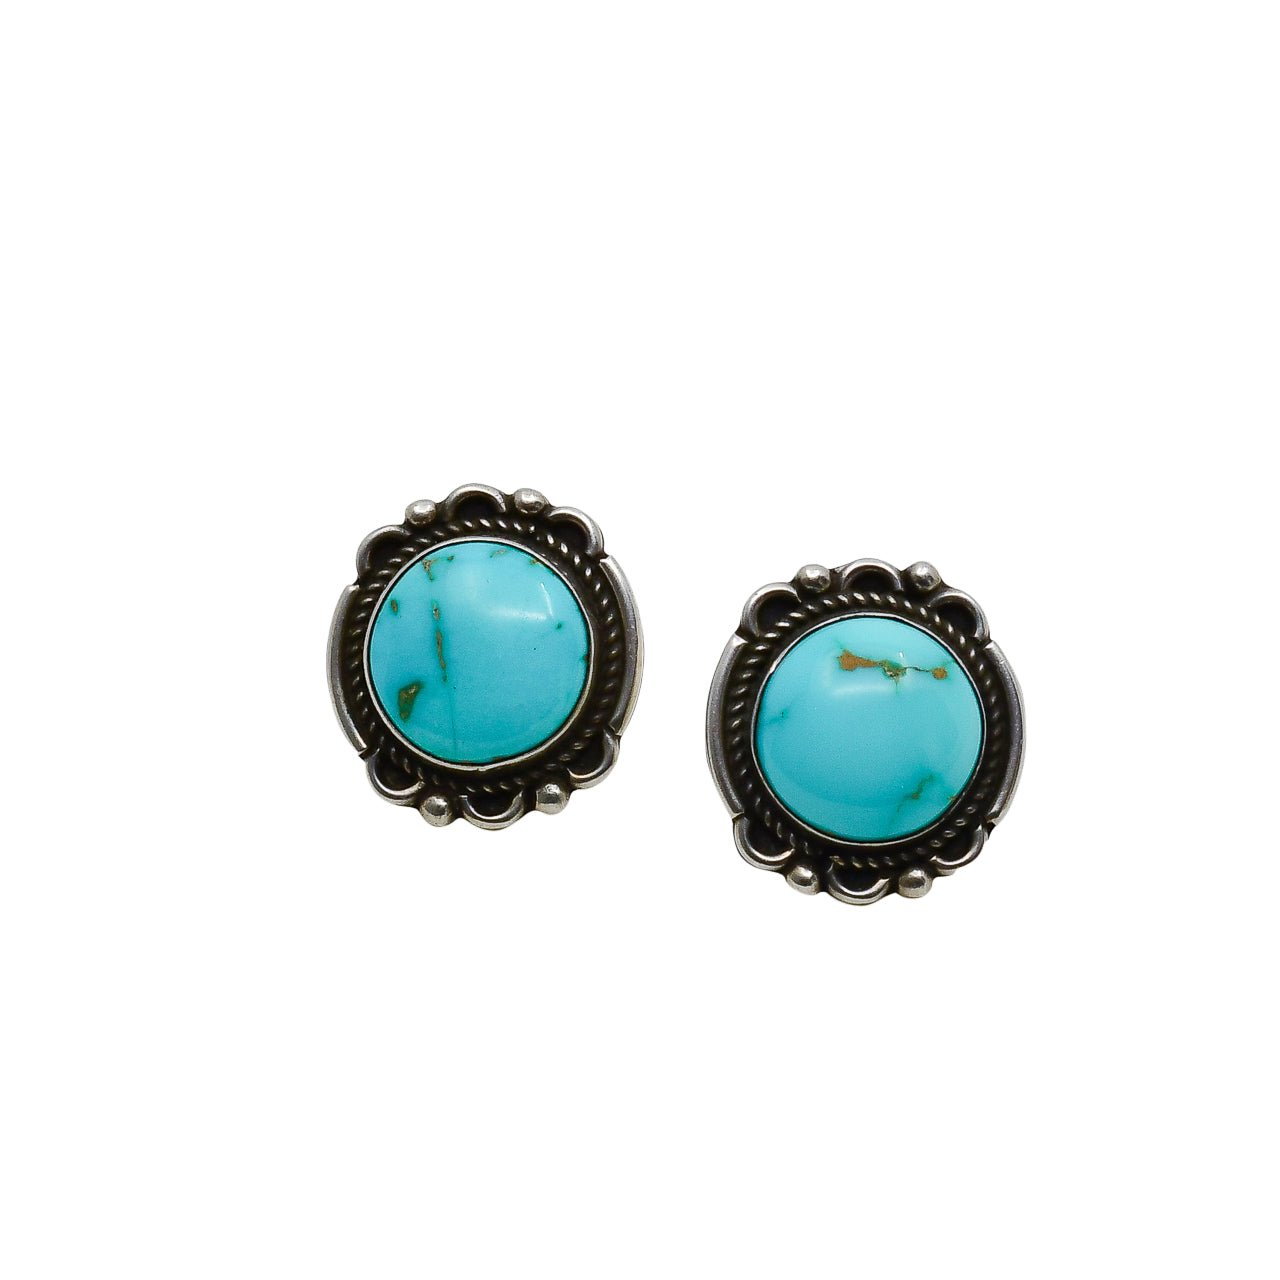 Vintage Navajo Turquoise Earrings Circa 1950 - Turquoise & Tufa